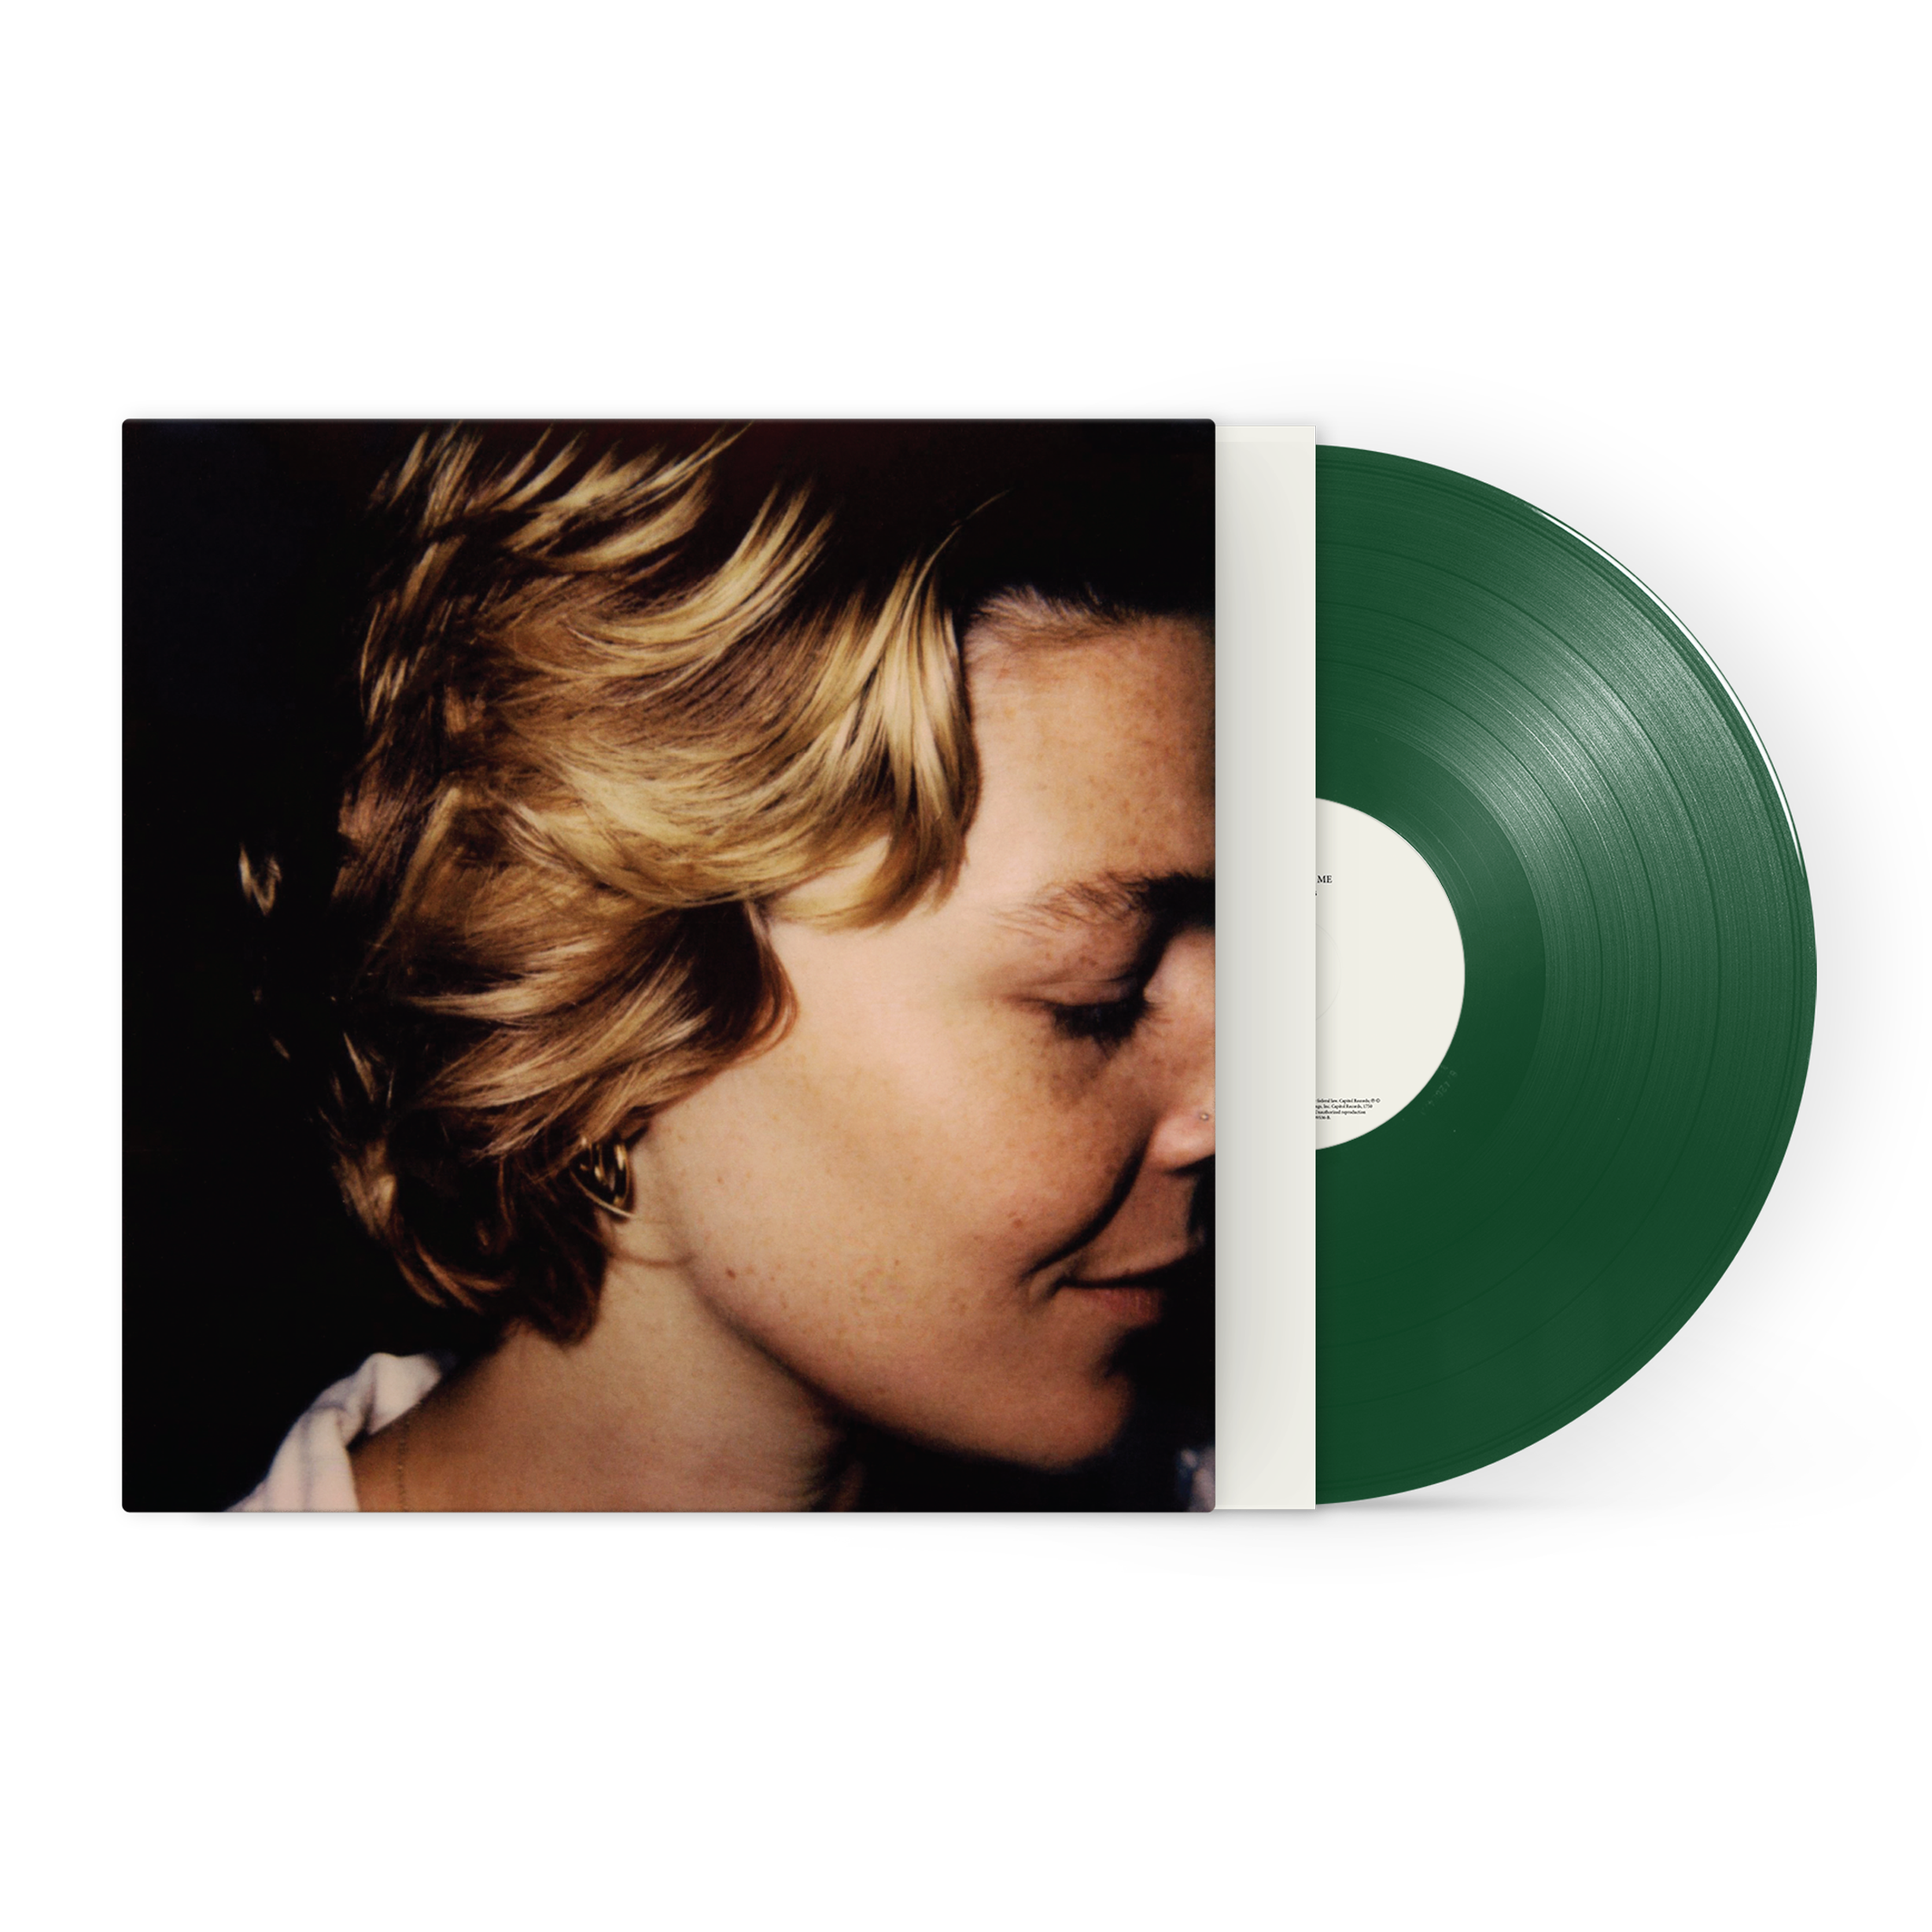 Don't Forget Me: Limited 'Milk' White & 'Dogwood' Green Vinyl LP + Signed Art Card